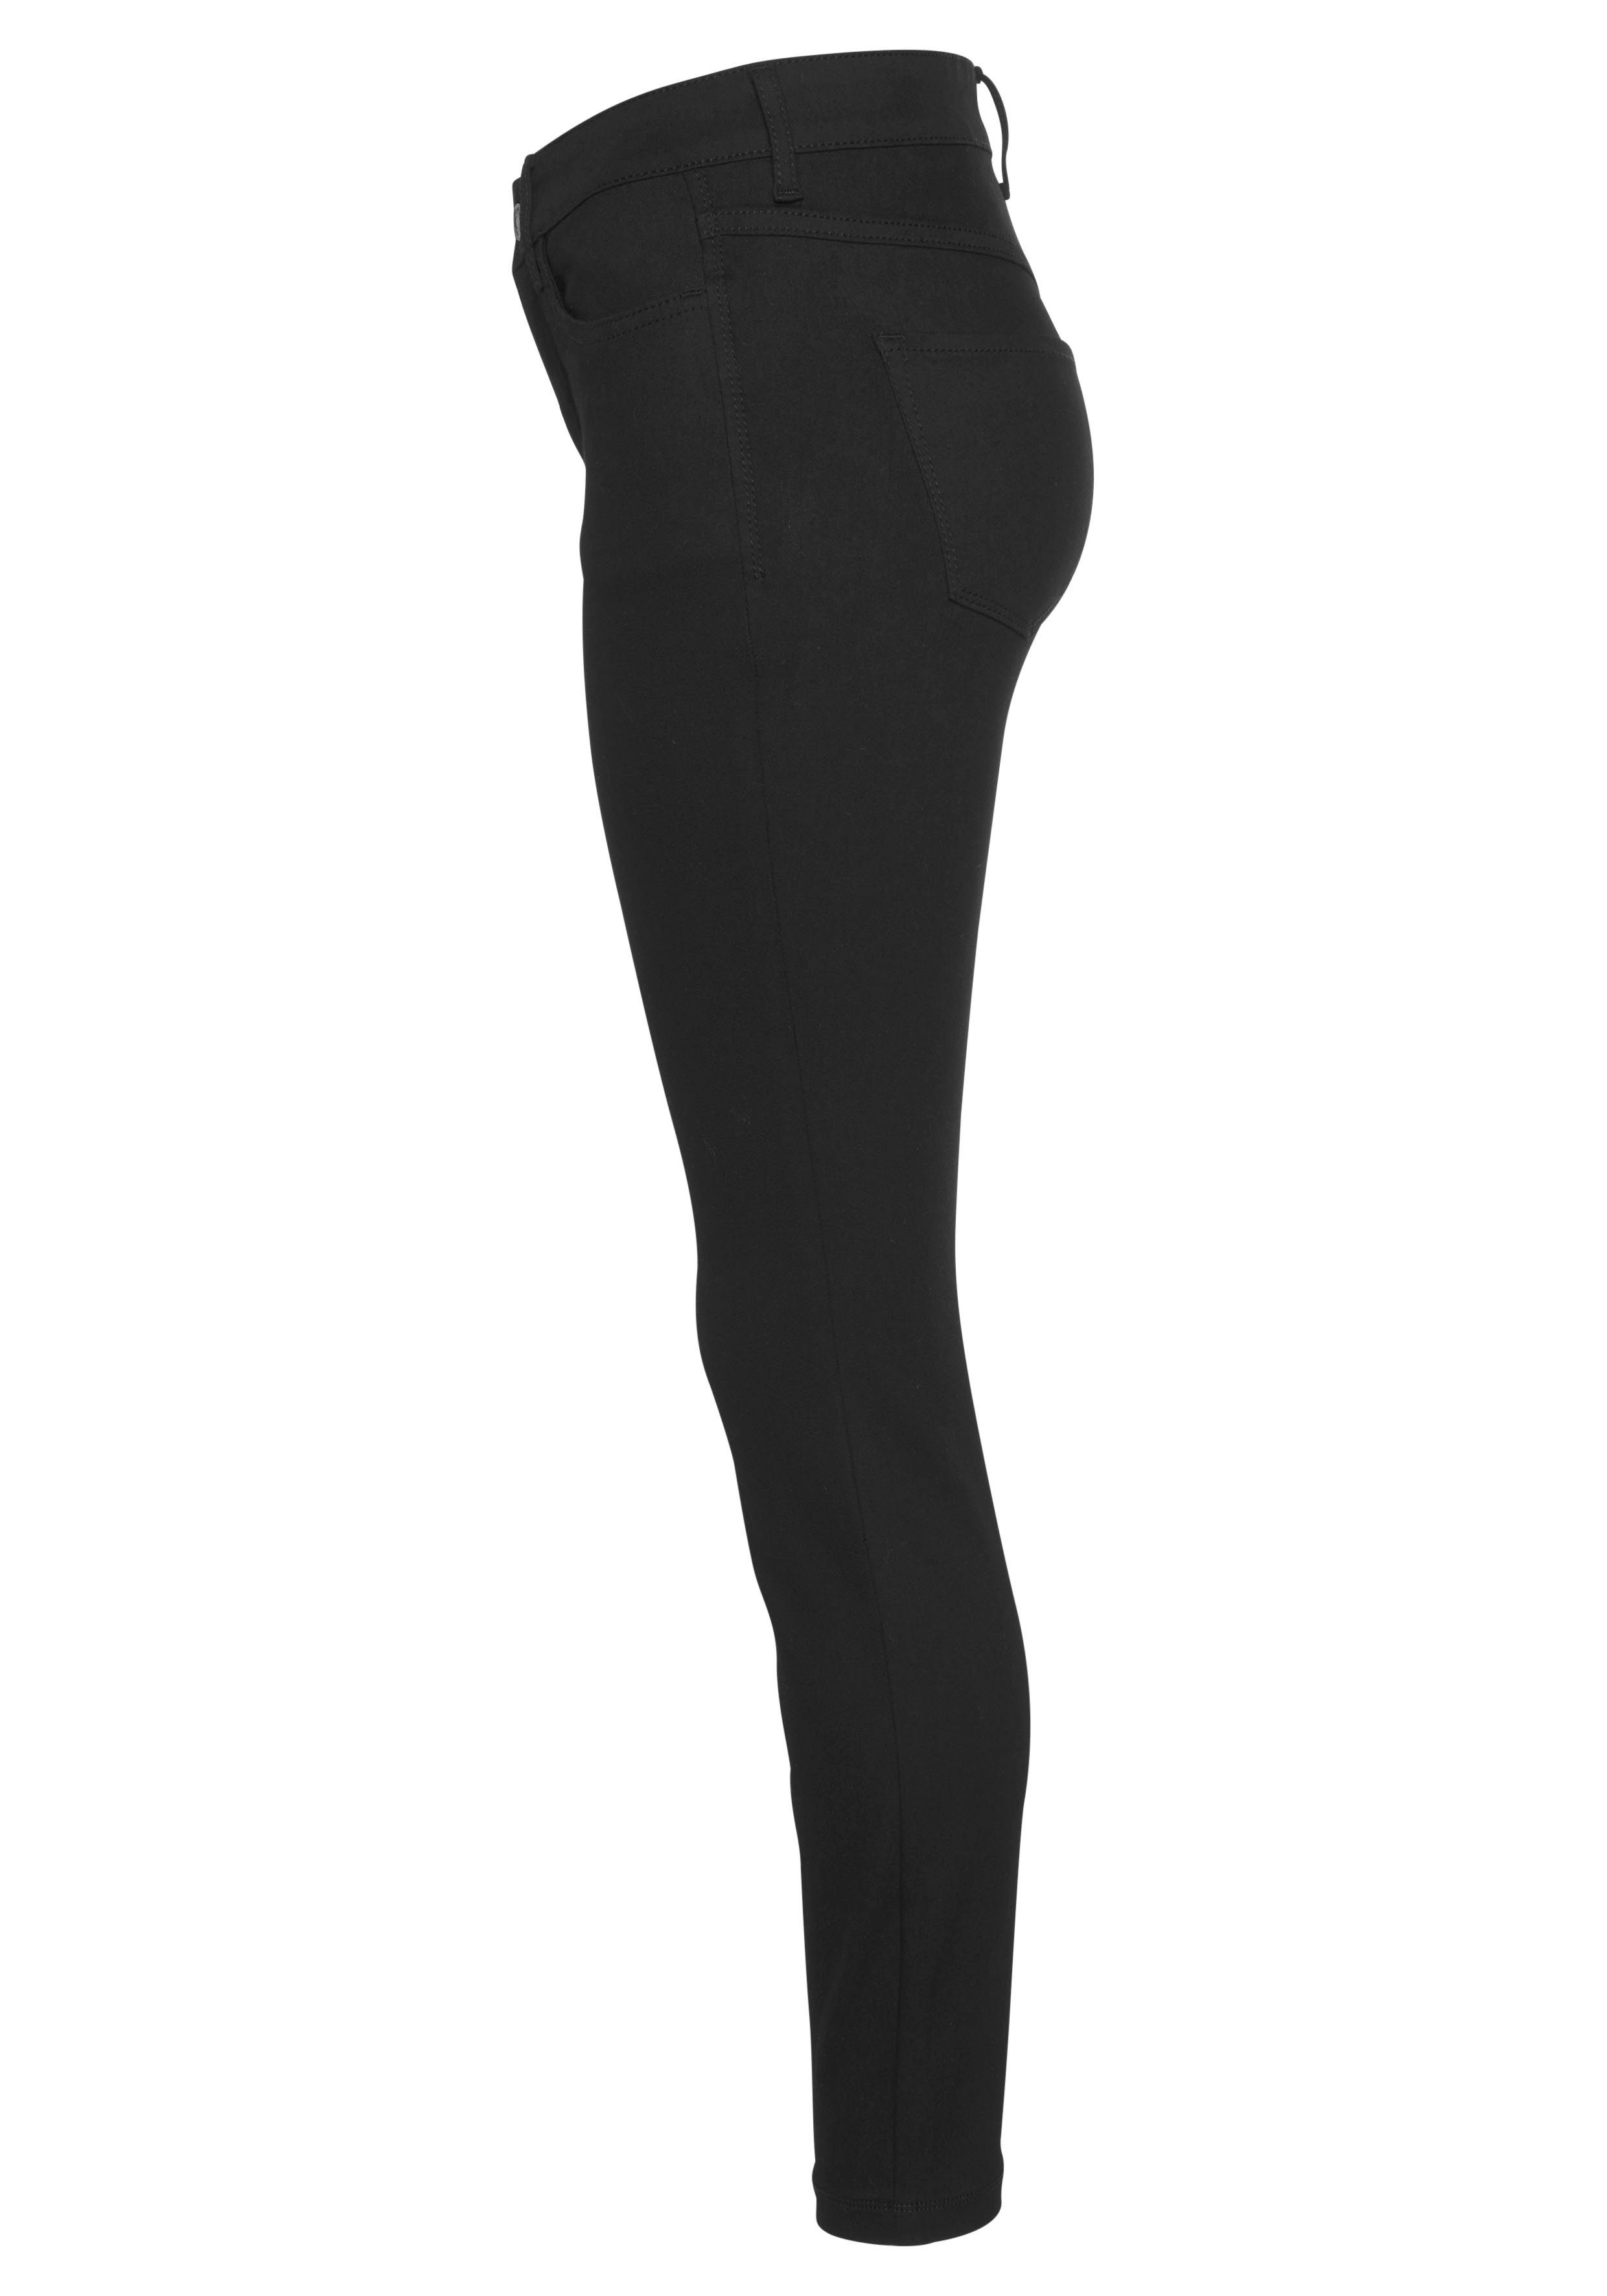 Power-Stretch MAC sitzt Skinny-fit-Jeans bequem black-black ganzen Hiperstretch-Skinny Tag Qualität den